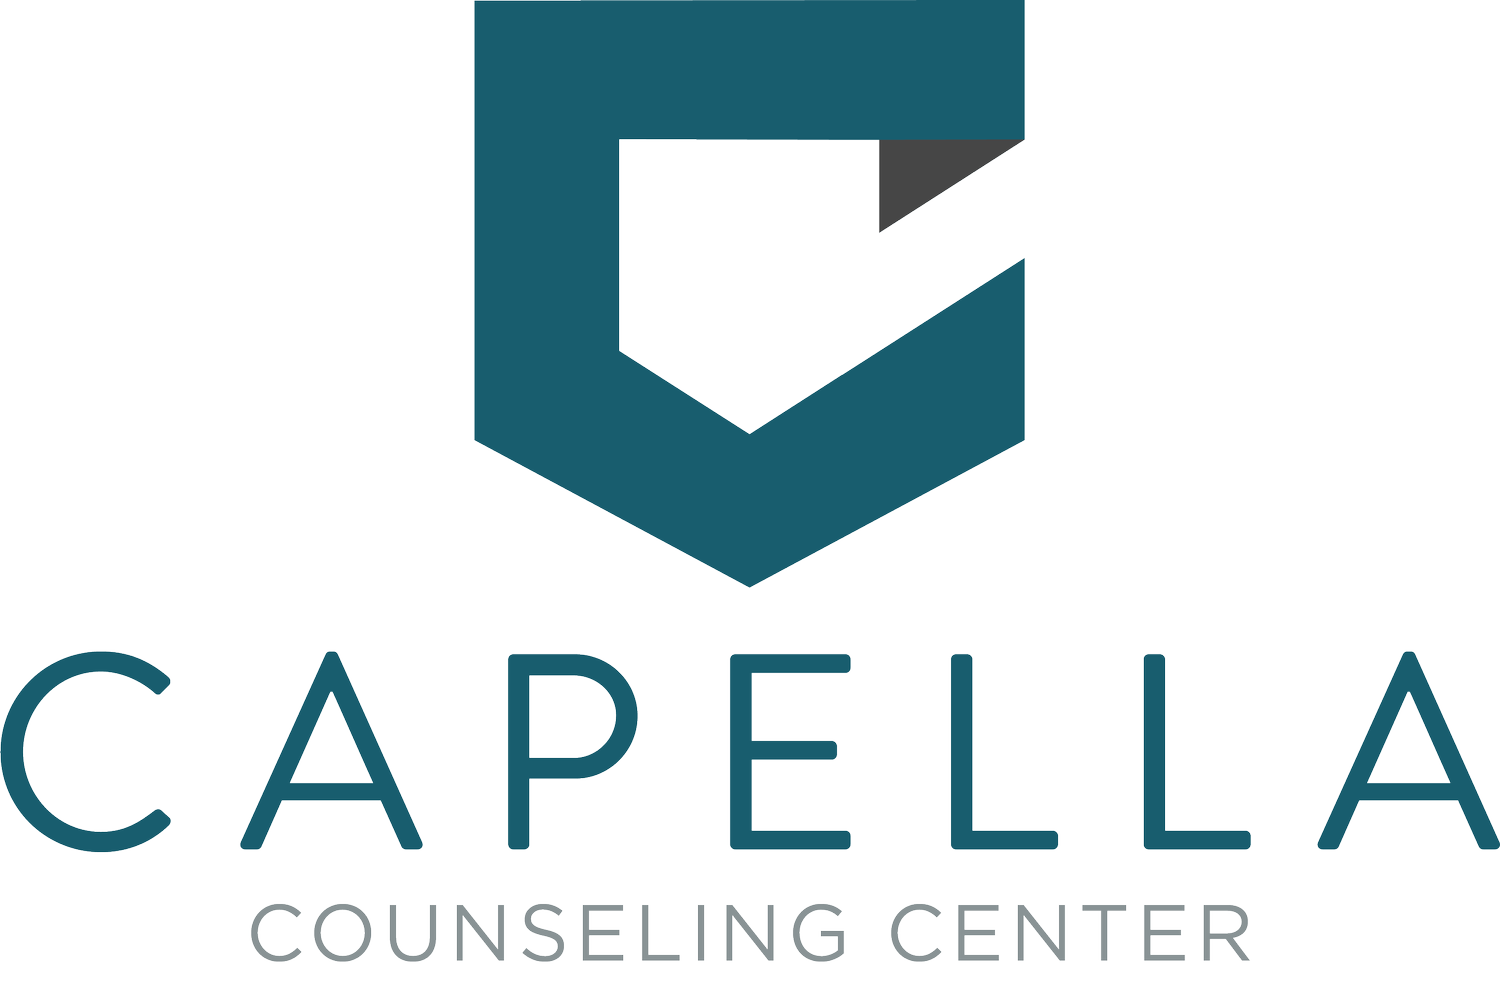 Capella Counseling